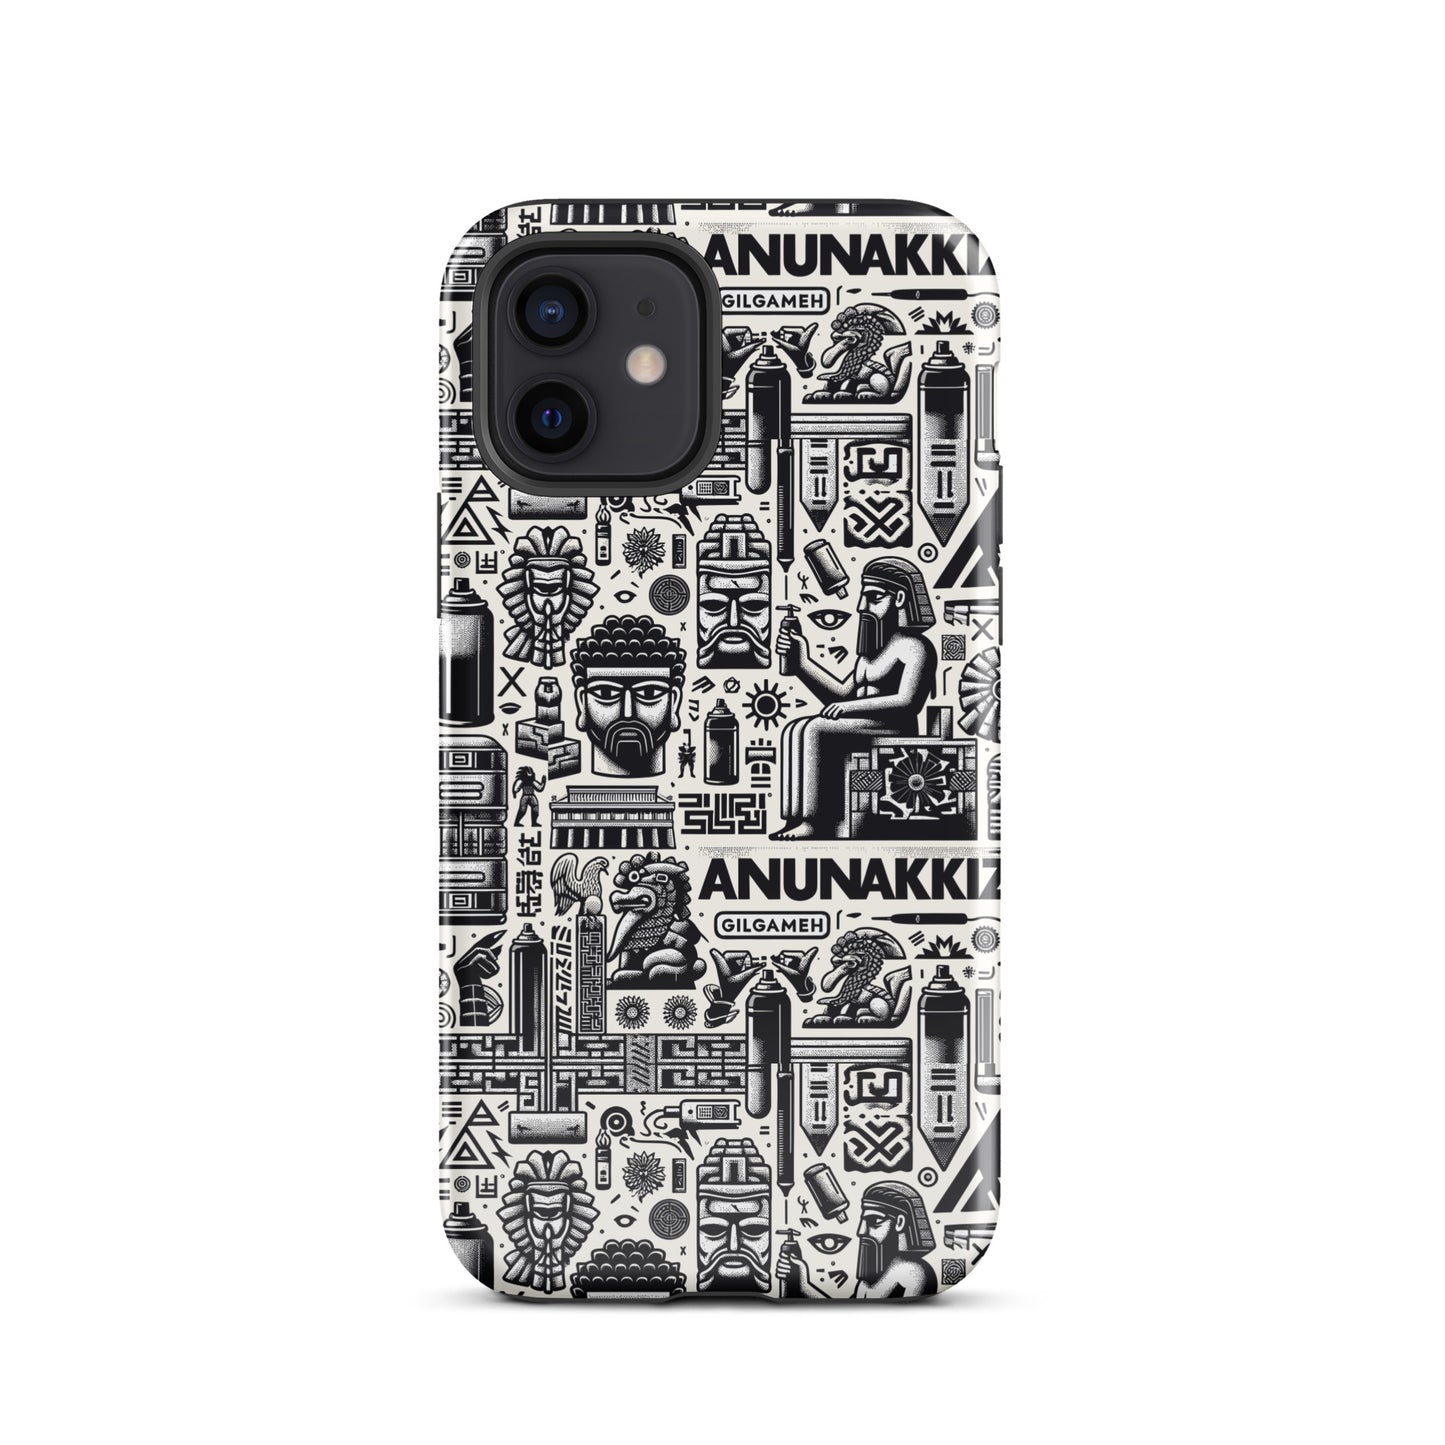 Anunakiz Ancient Graffiti Pattern Tough Case for iPhone®